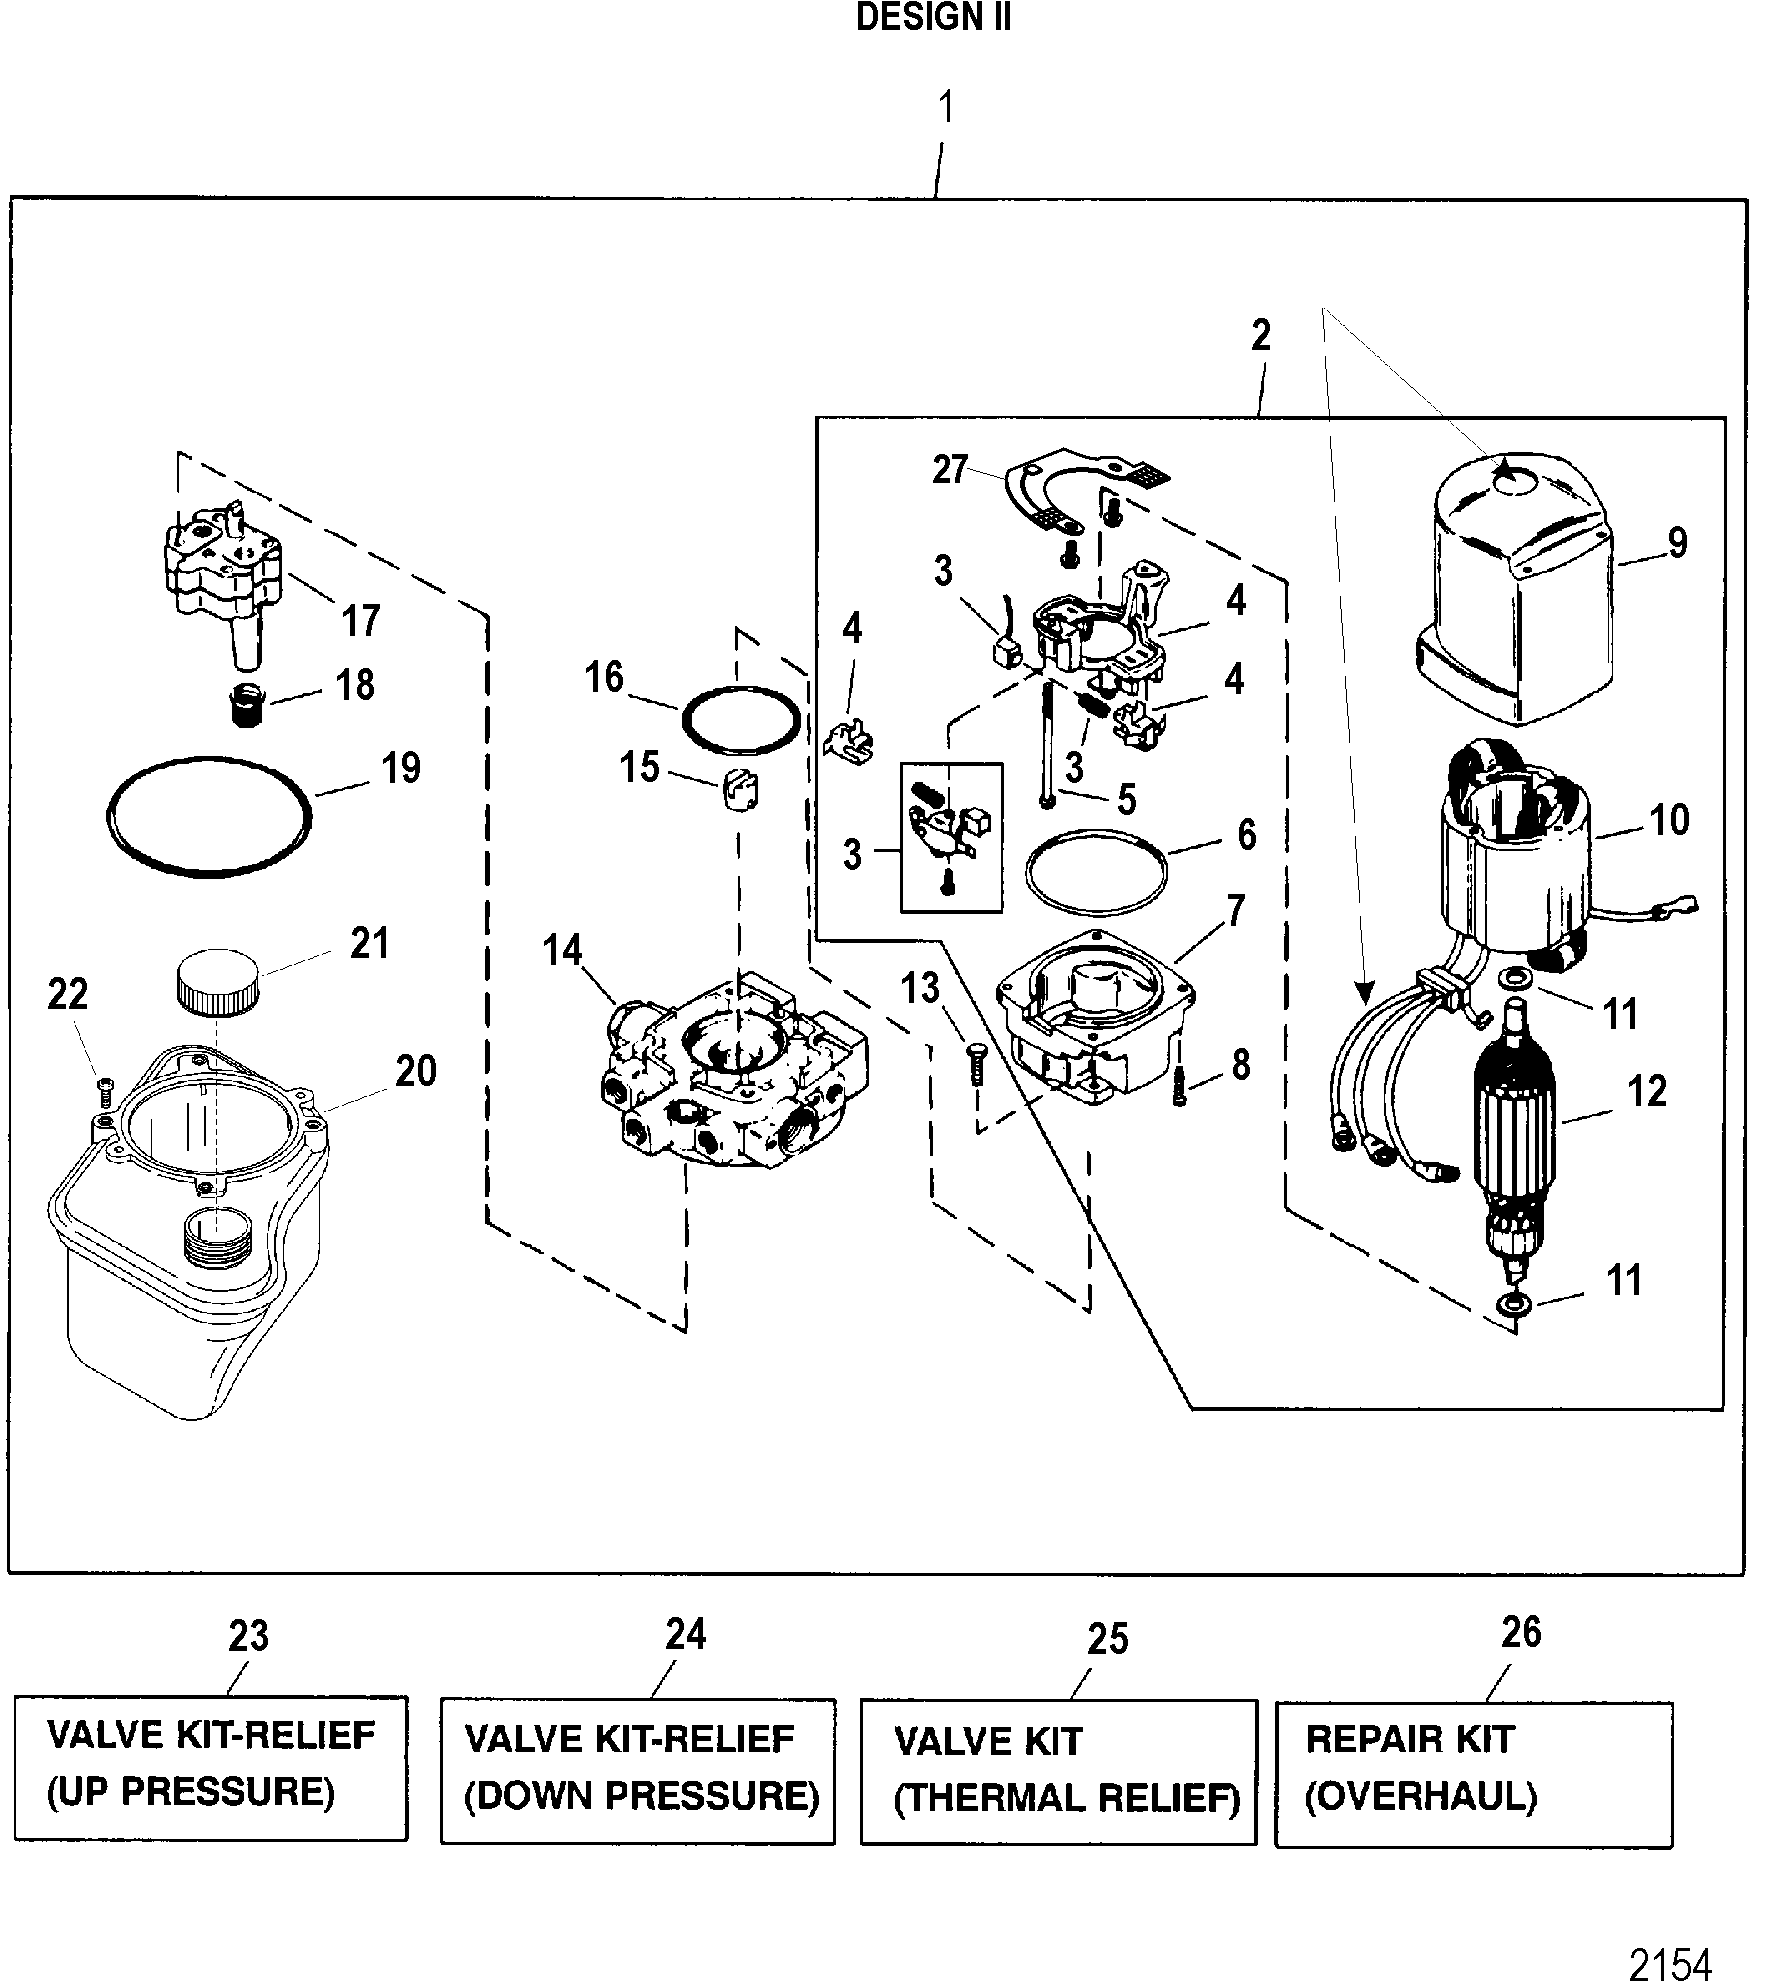 Pump/Motor(Top MT Reservoir) (Design II - 14336A25)